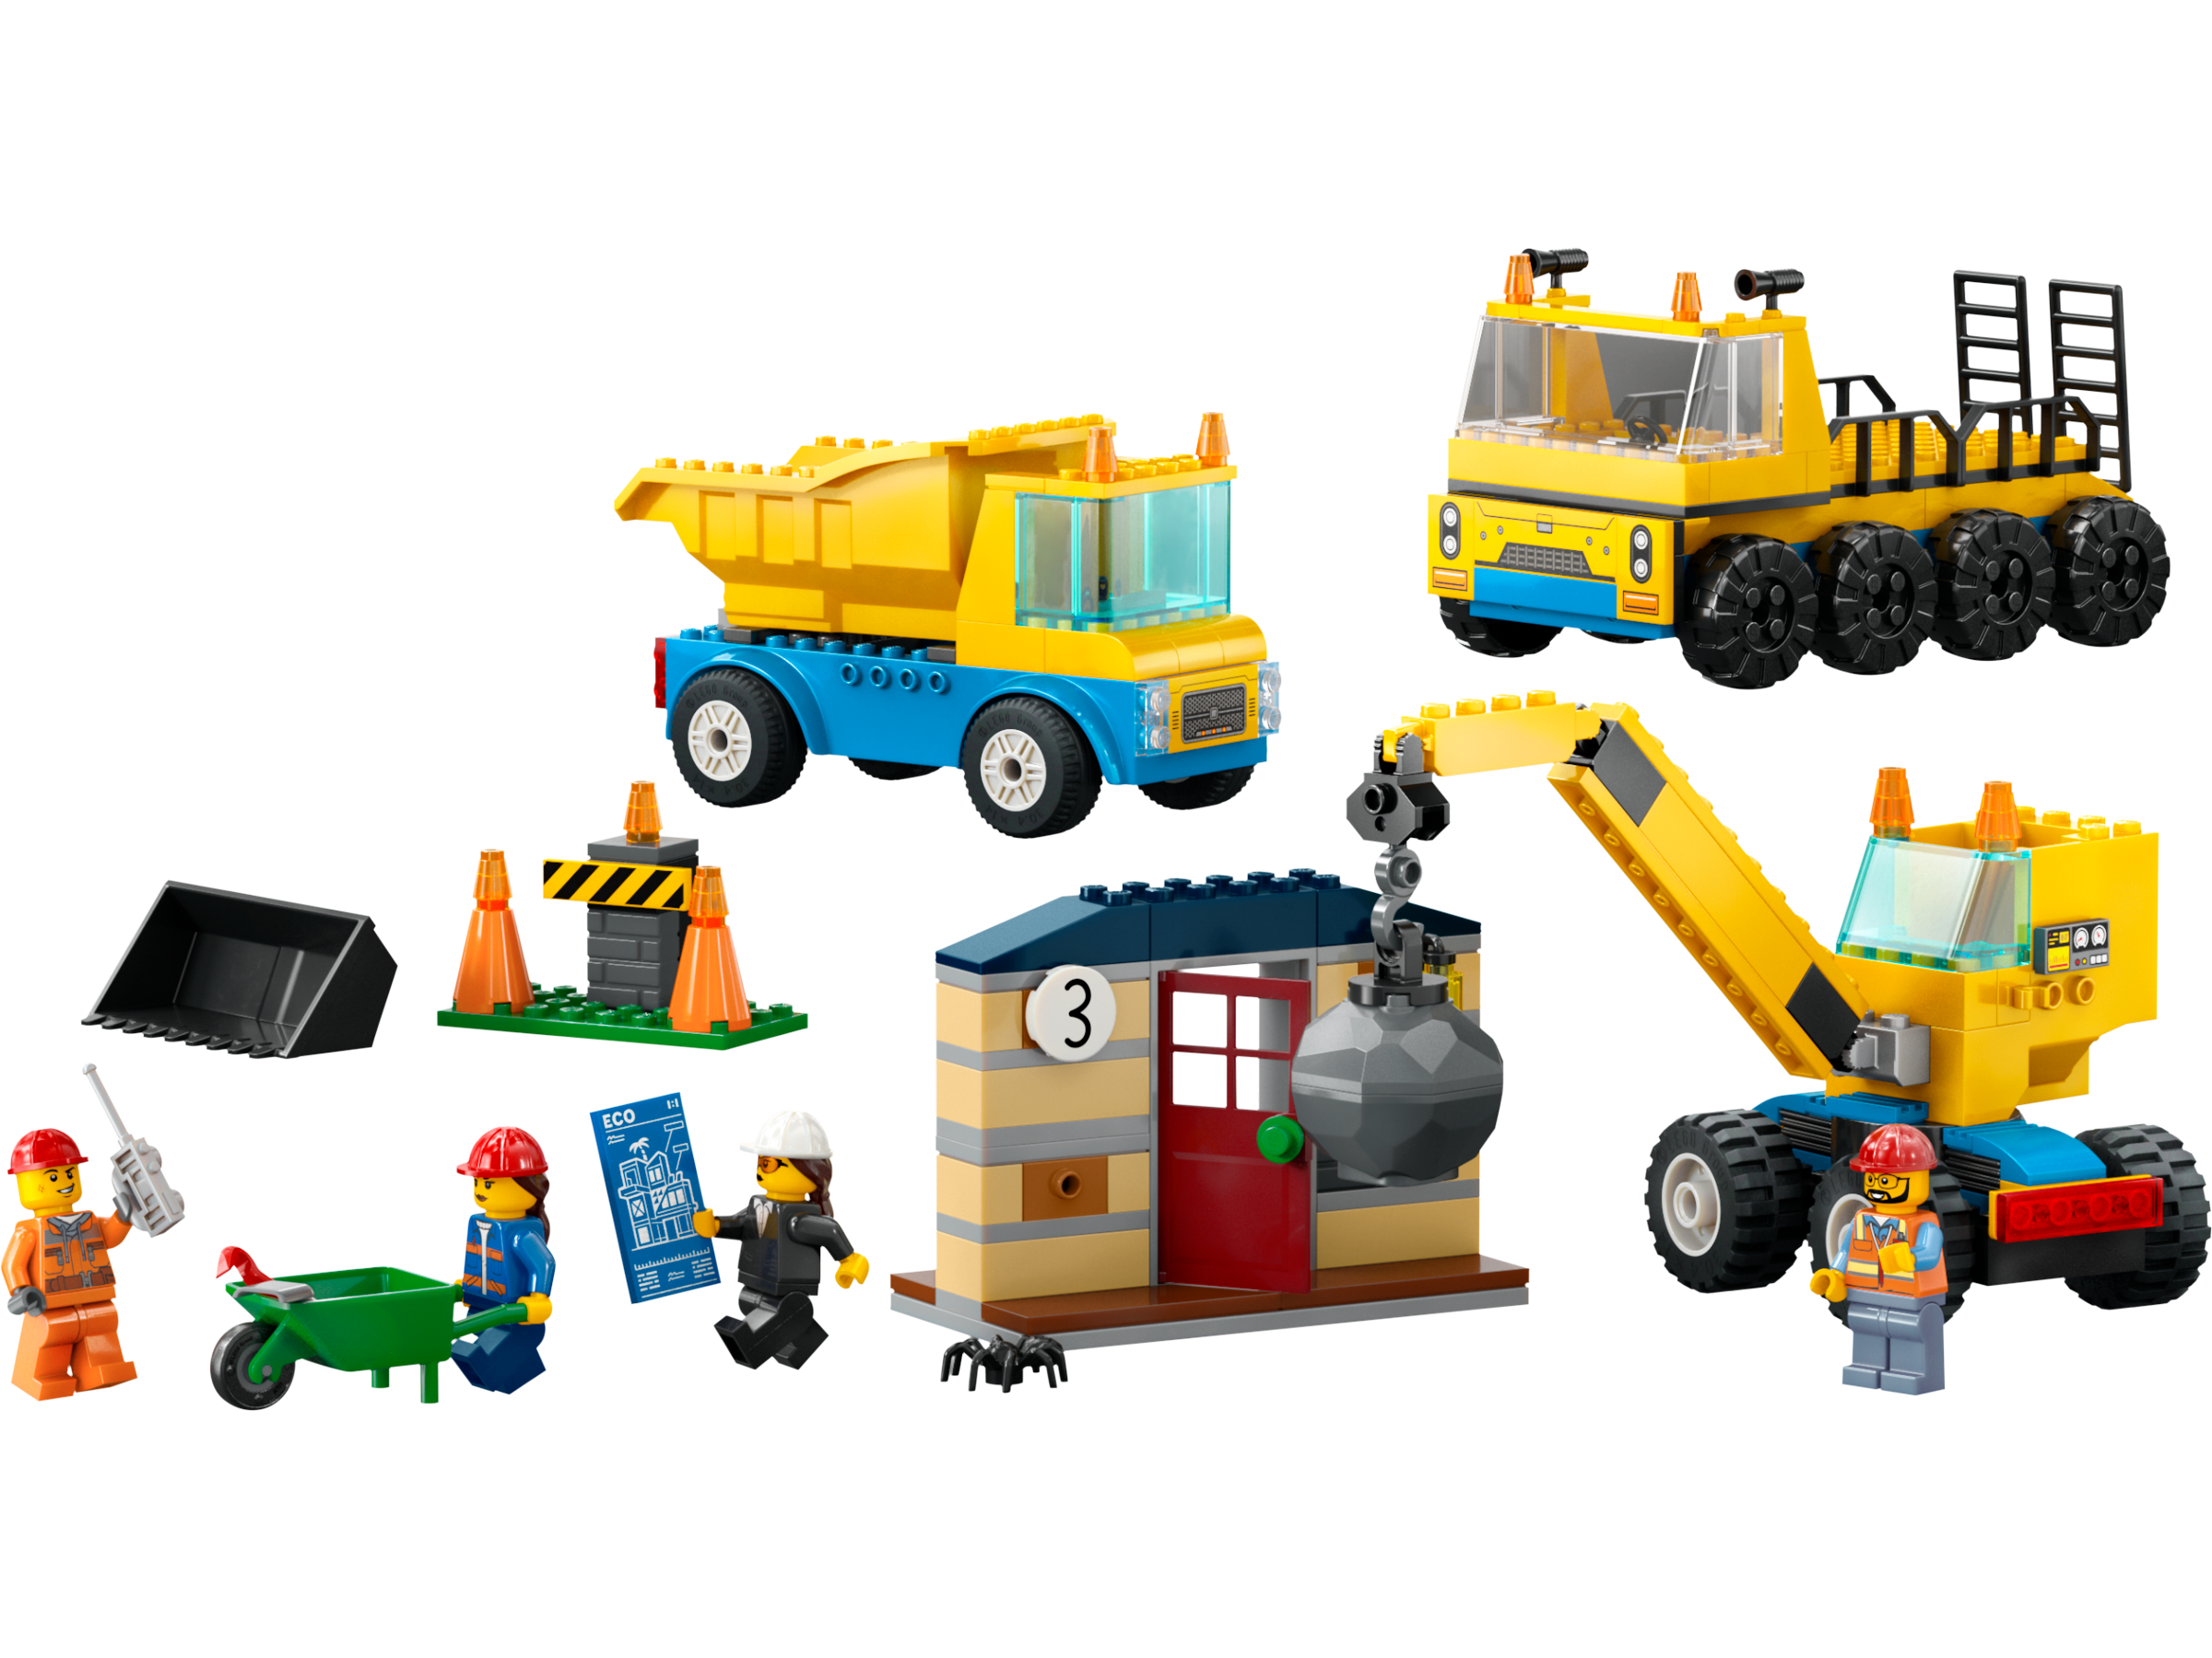 LEGO 60391 Construction Trucks and Wrecking Ball Crane, 5702017416465